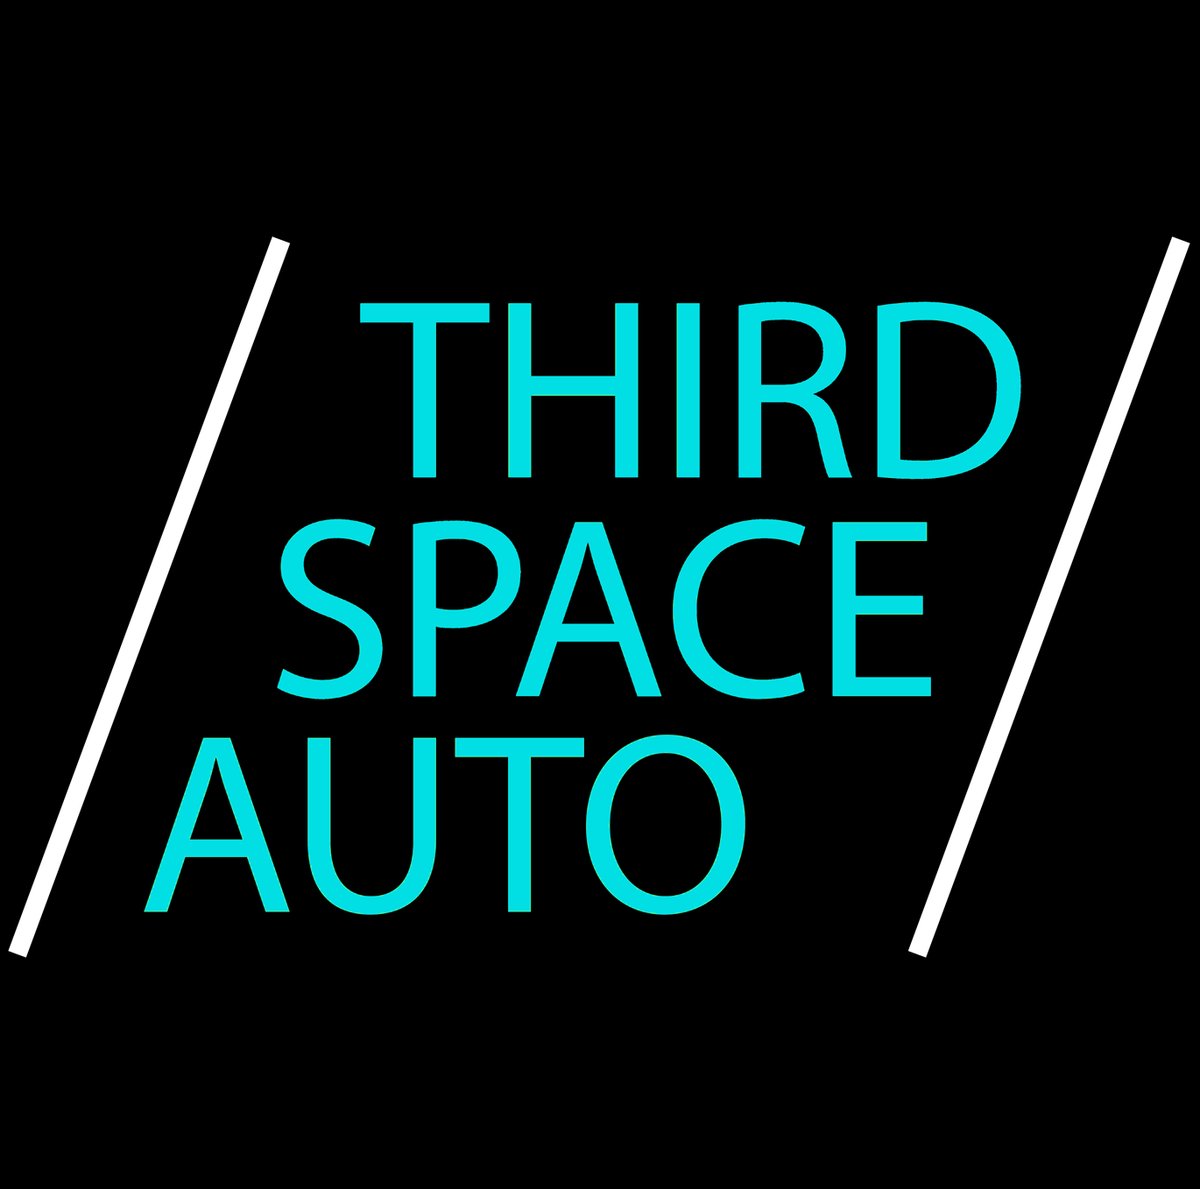 Third SPACE AUTO